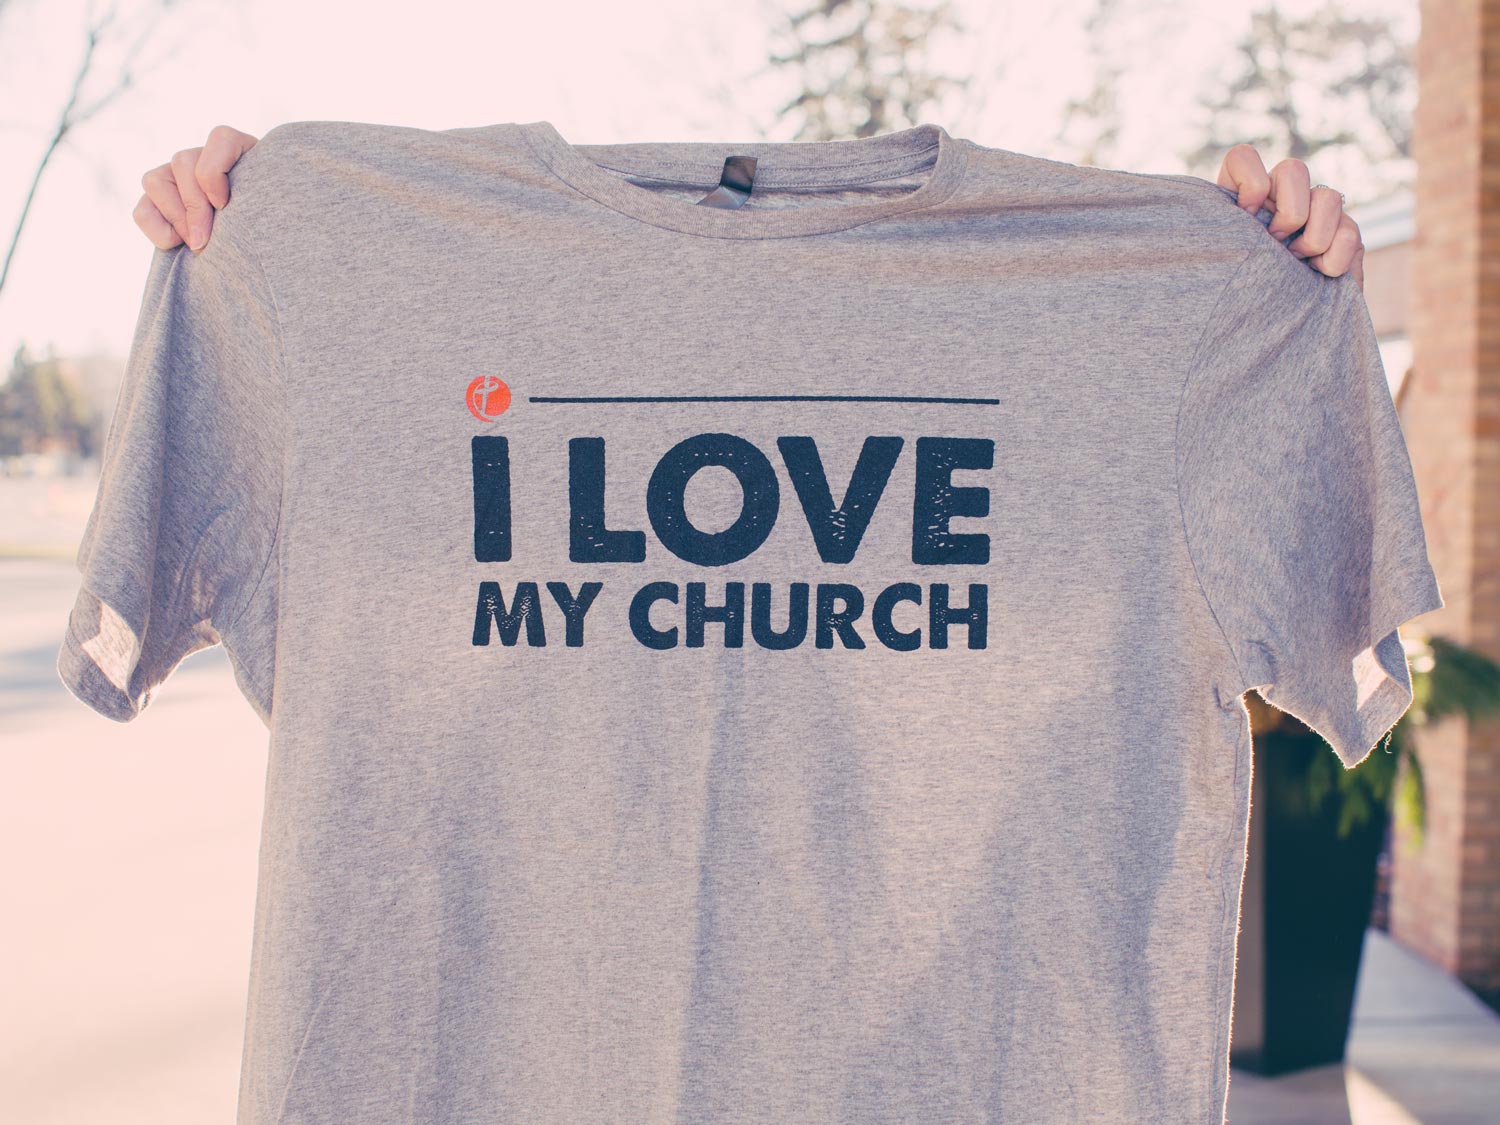 Community of Grace "I Love My Church" t-shirts